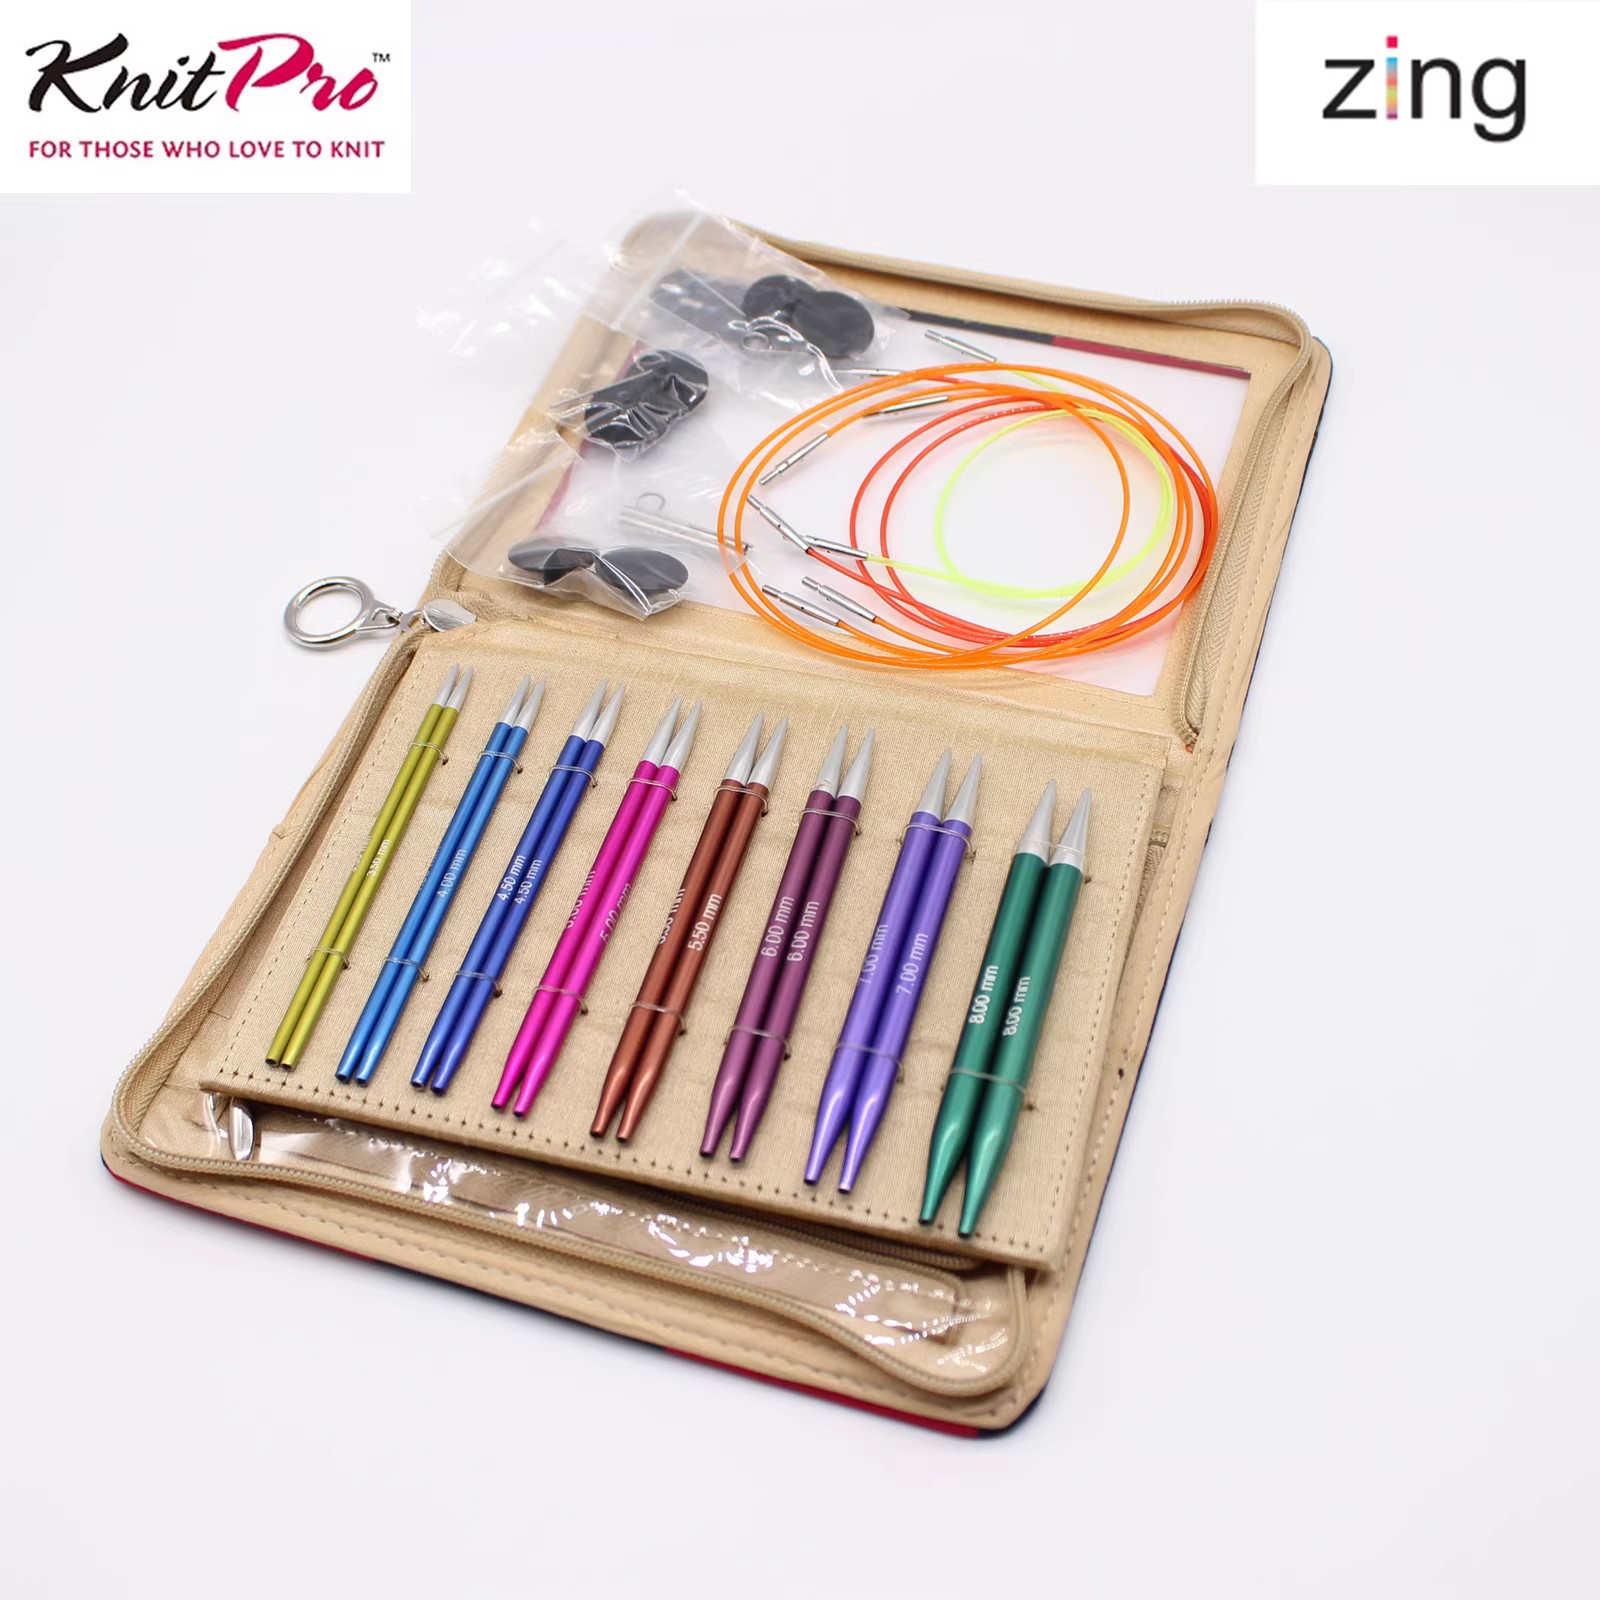 Knitpro Zing进口编织工具环形毛线针铝制可拆针头圈织毛衣针套装